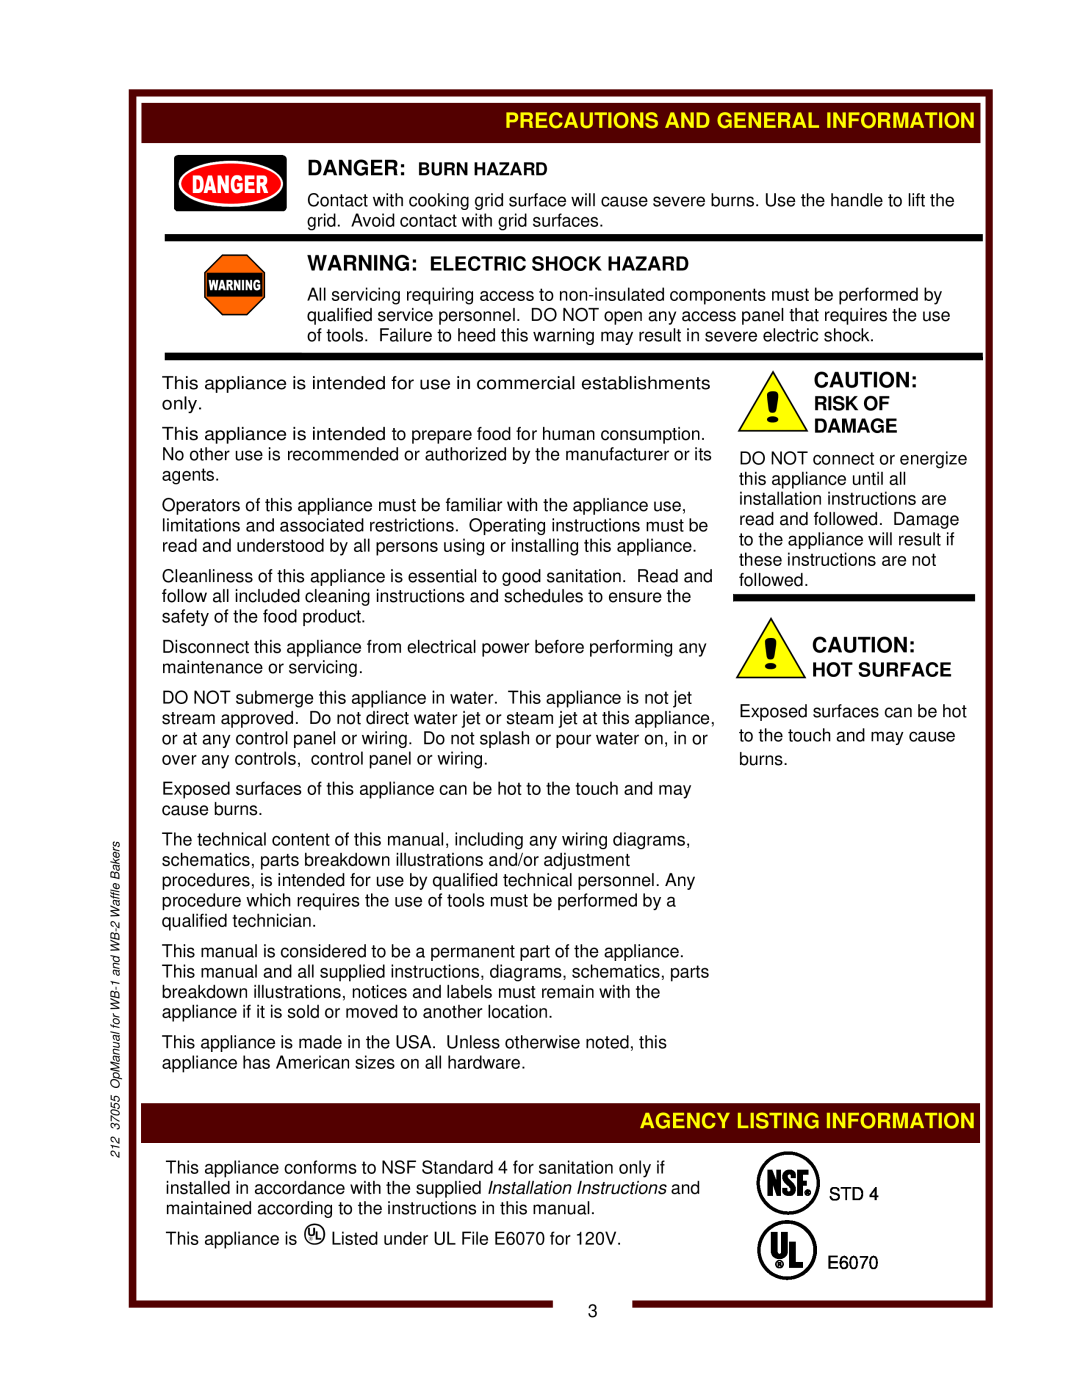 Wells WB-1 Agency Listing Information, Warning Electric Shock Hazard, Risk Of Damage, Hot Surface, Danger Burn Hazard 